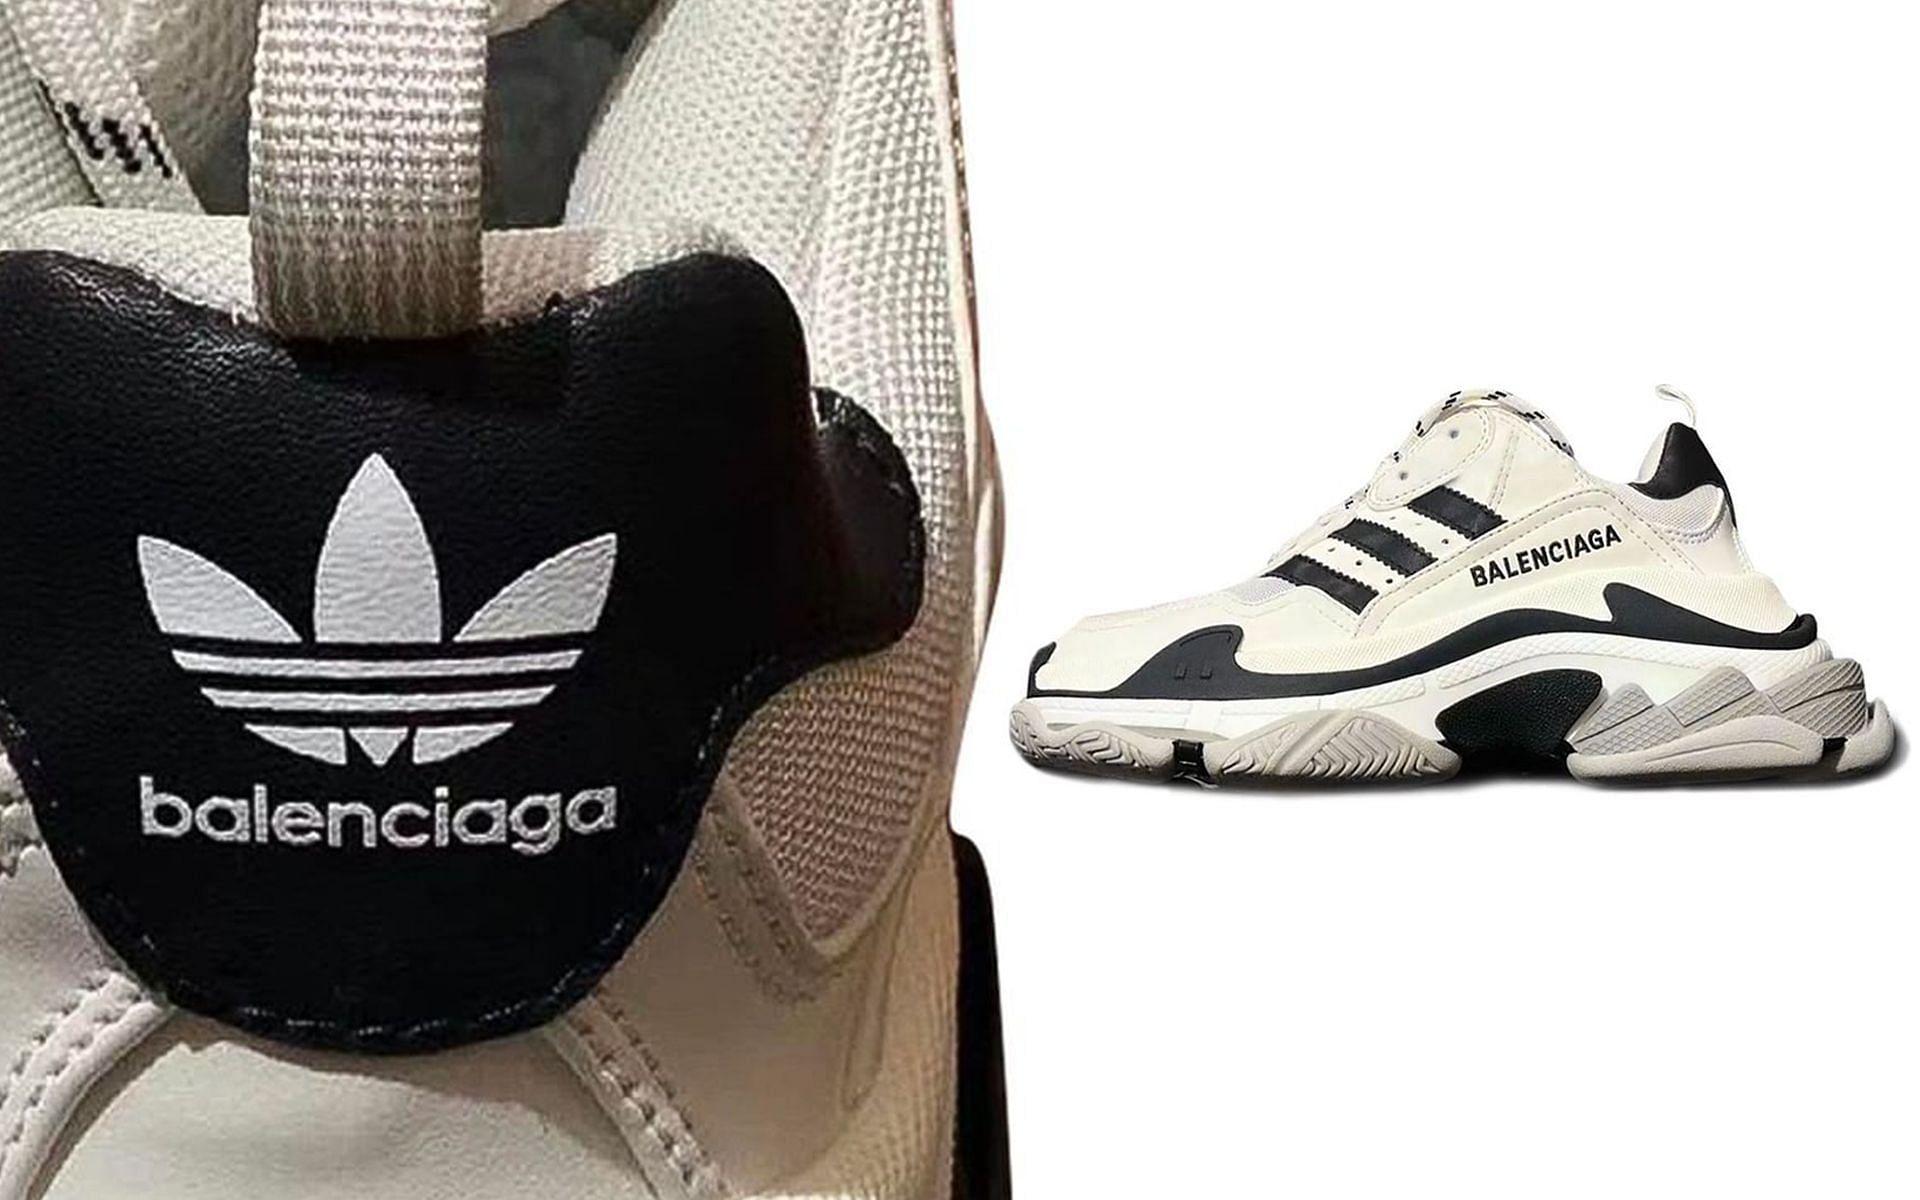 Adidas x Balenciaga collaboration rumors circulate following leaked images (Images via @apolloluo1976/Instagram)